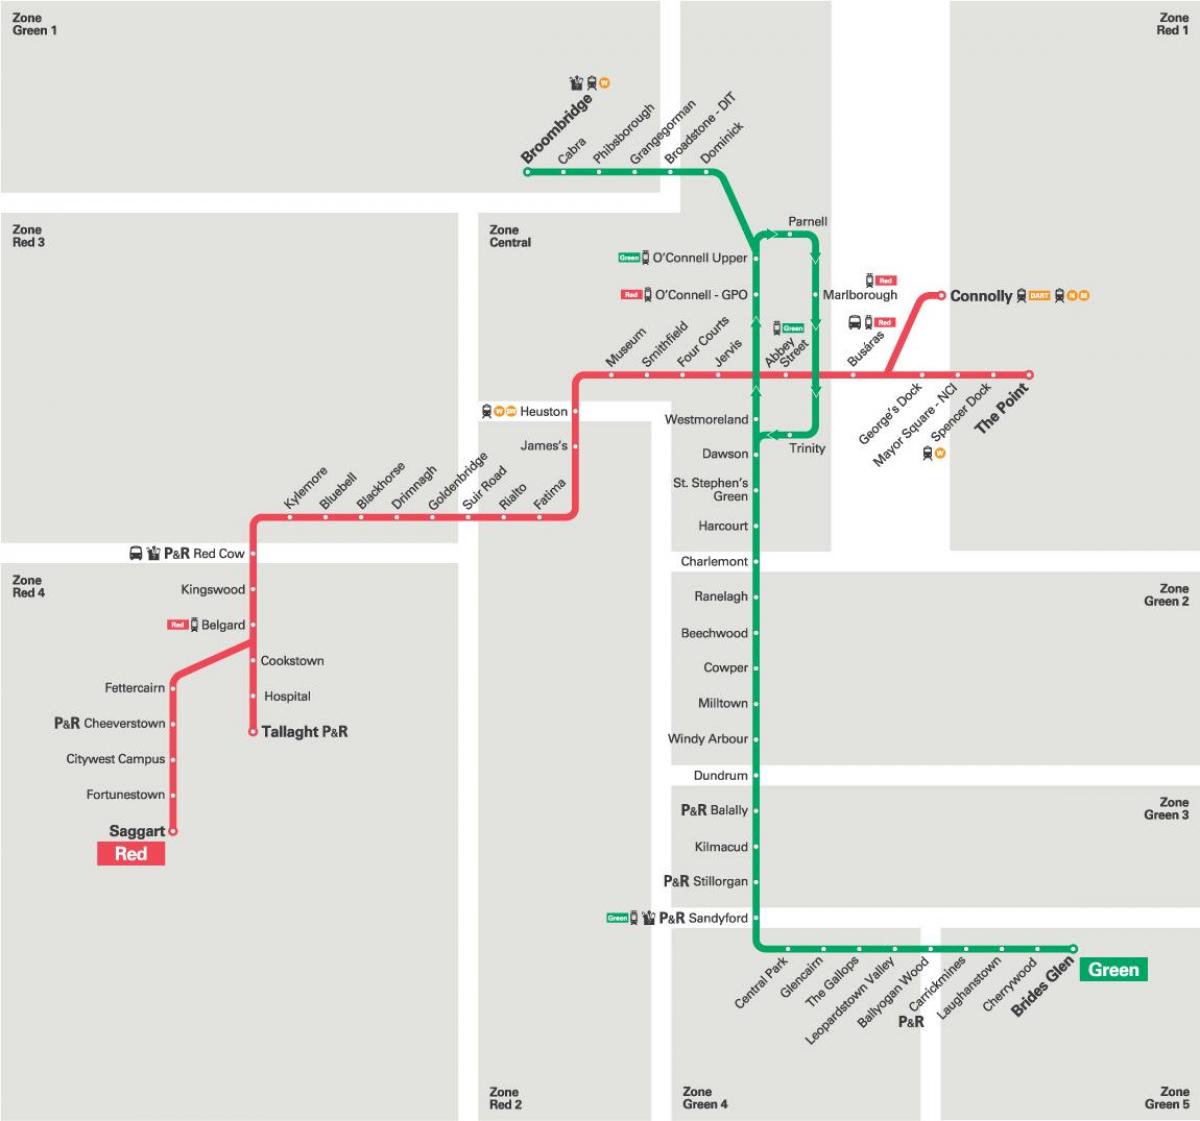 Dublin Luas red line map